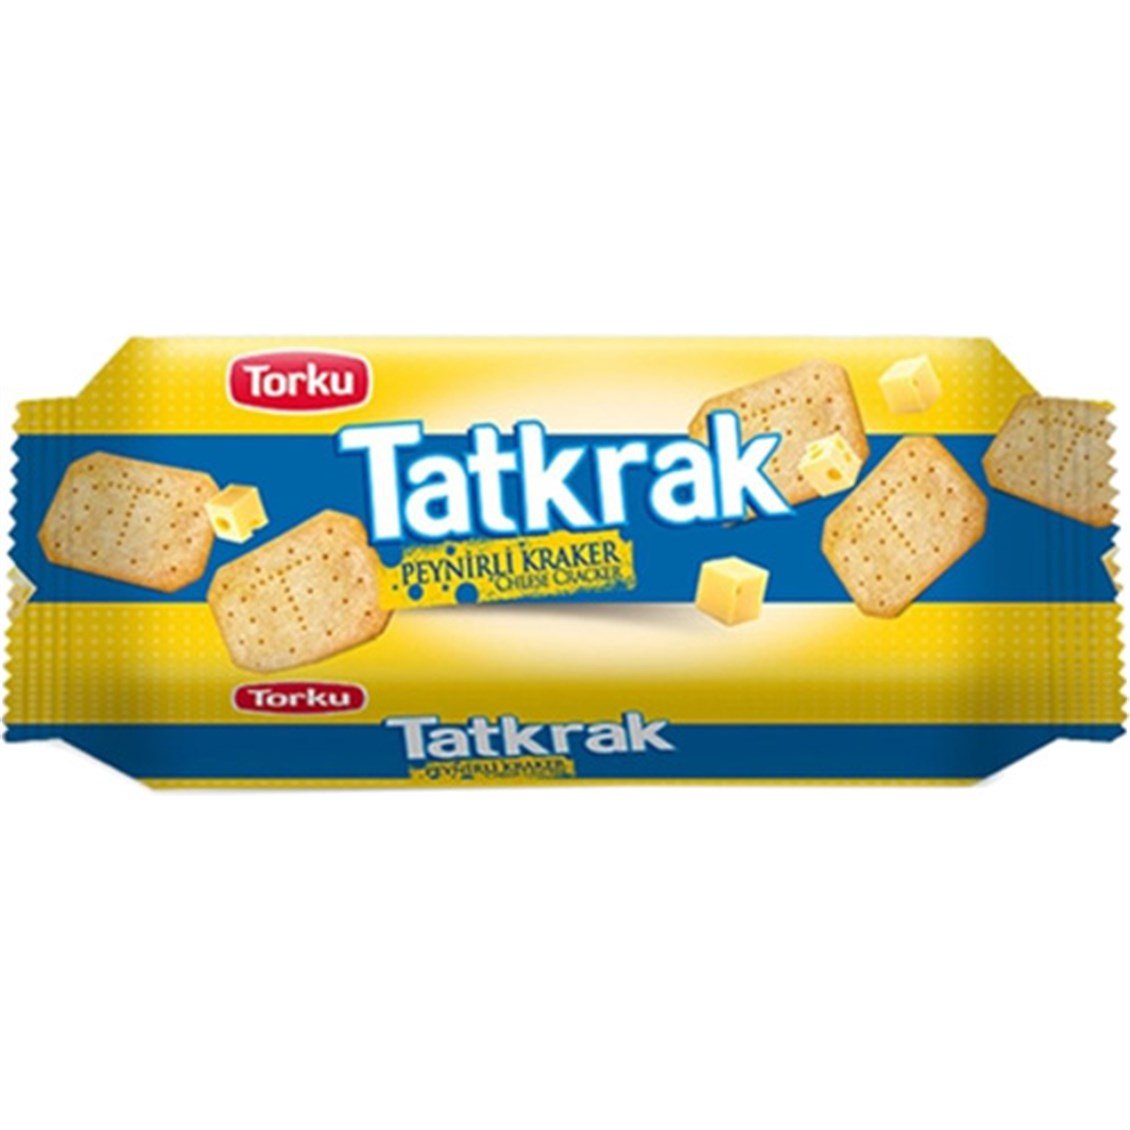 Torku Tatkrak Peynirli Kraker 100 gr - Onur Market